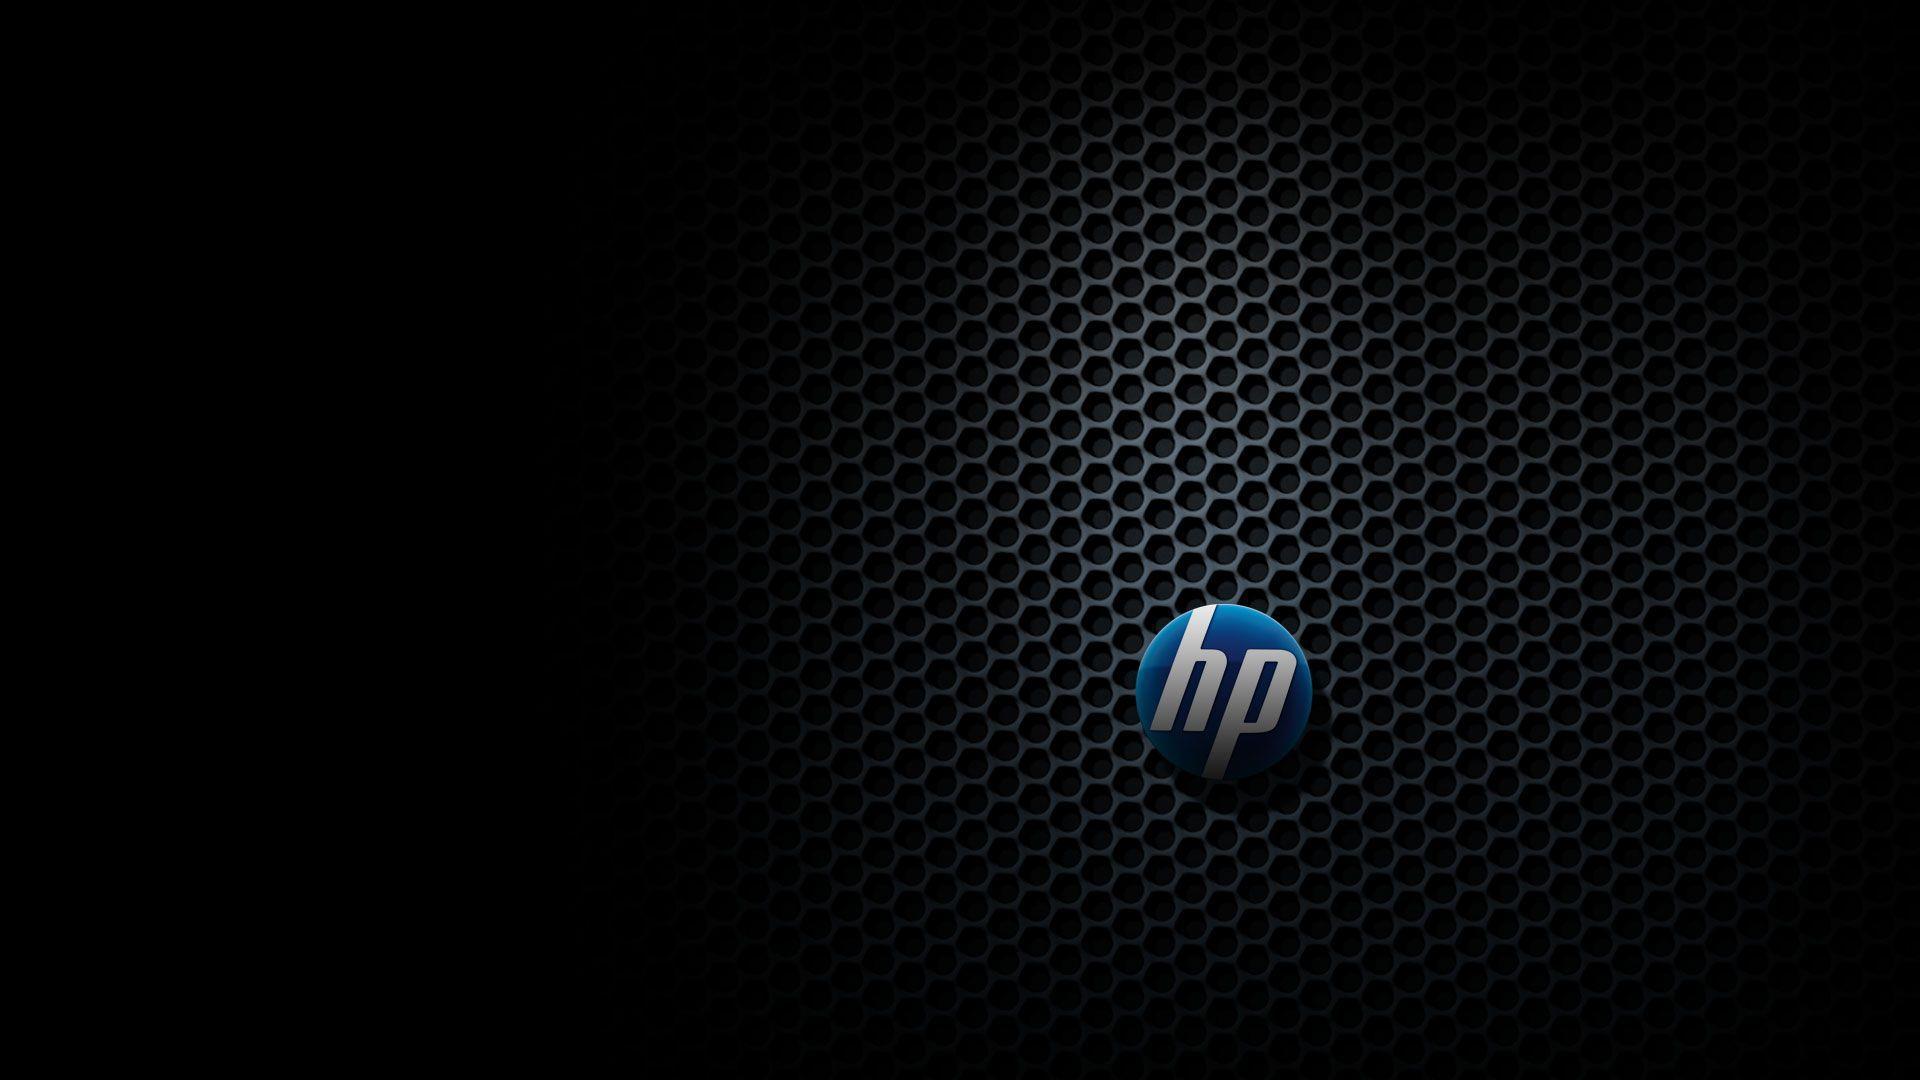 hp desktop wallpaper HD 1080p. Desktop Background for Free HD